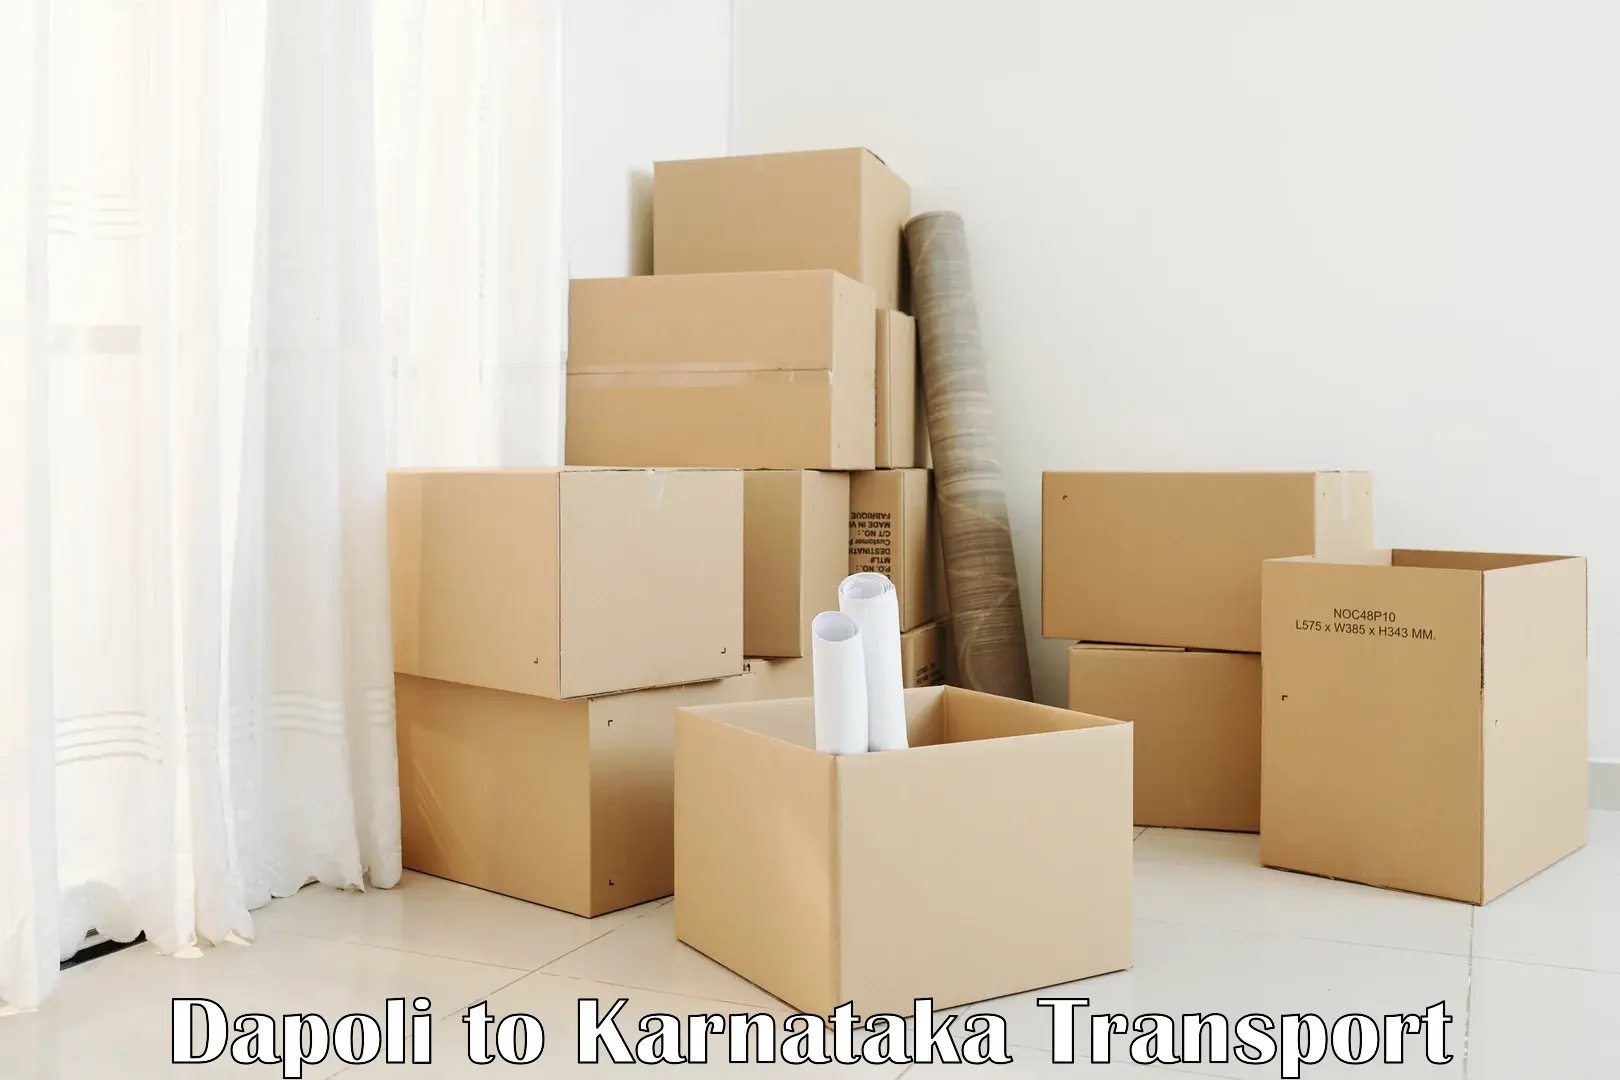 Shipping partner Dapoli to Karnataka